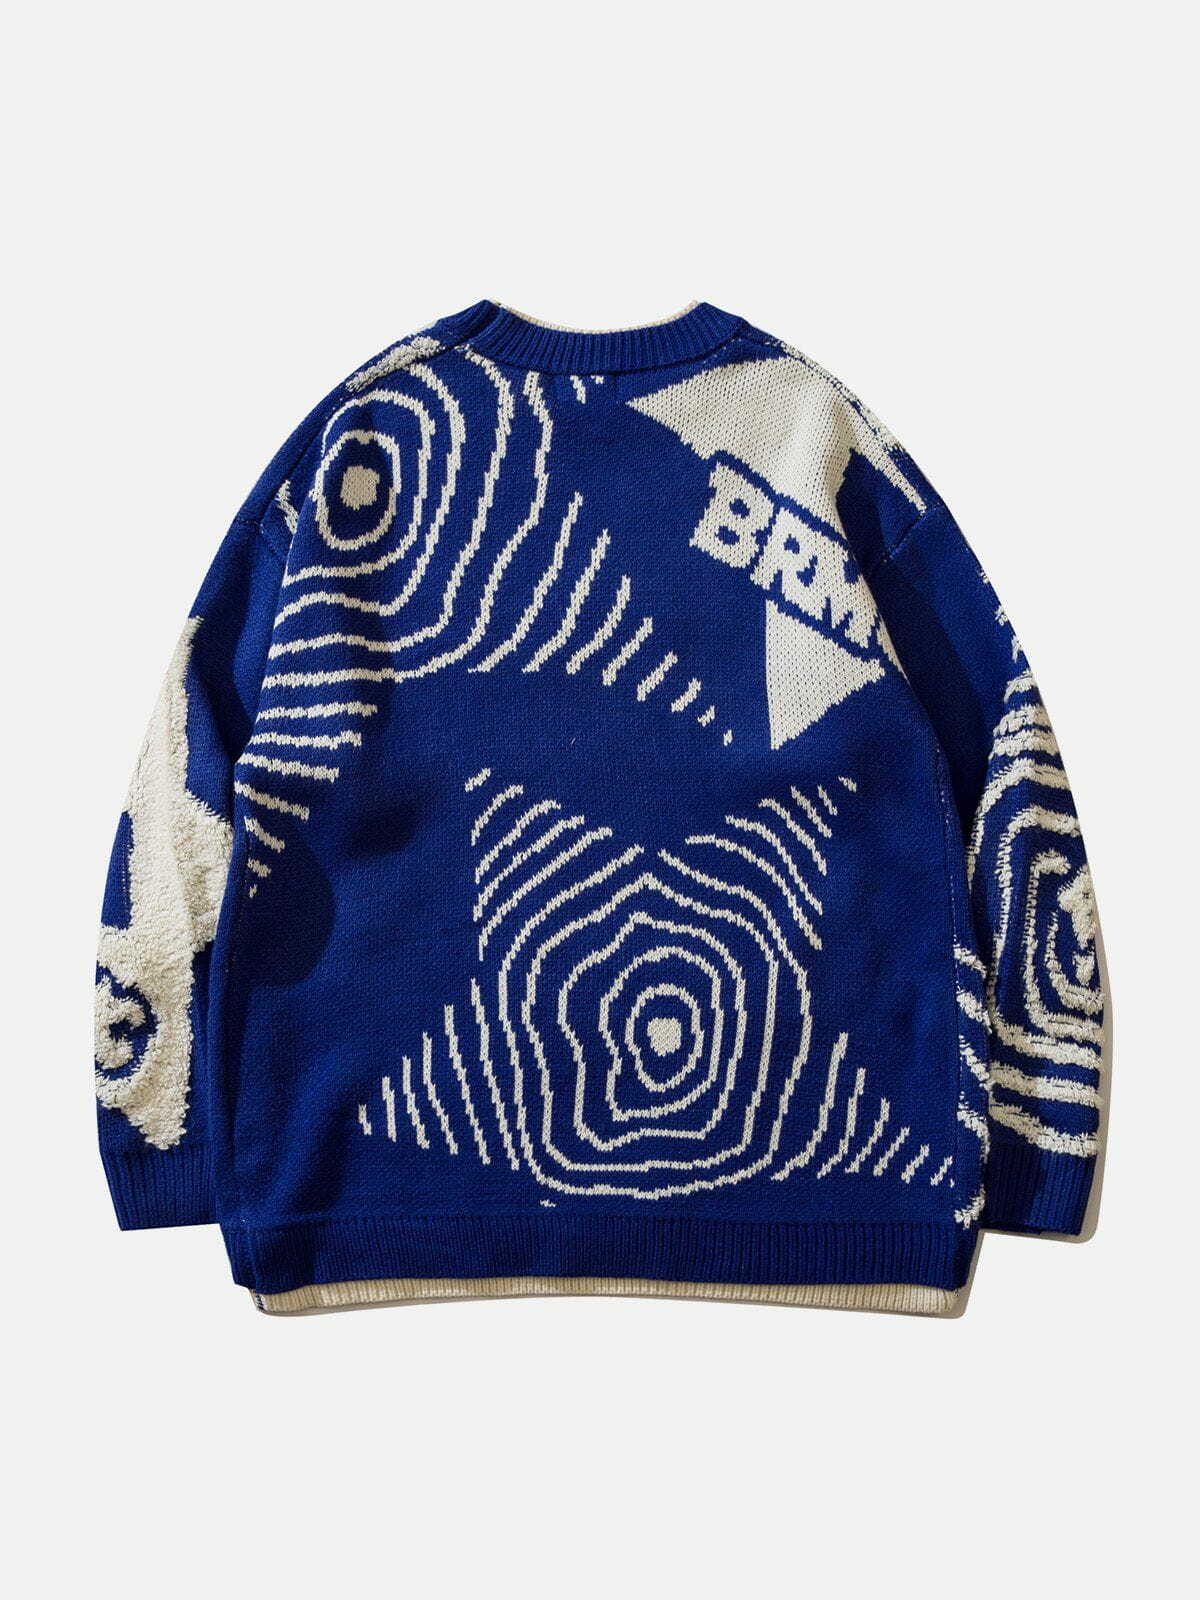 flocked patchwork sweater edgy streetwear statement 5043